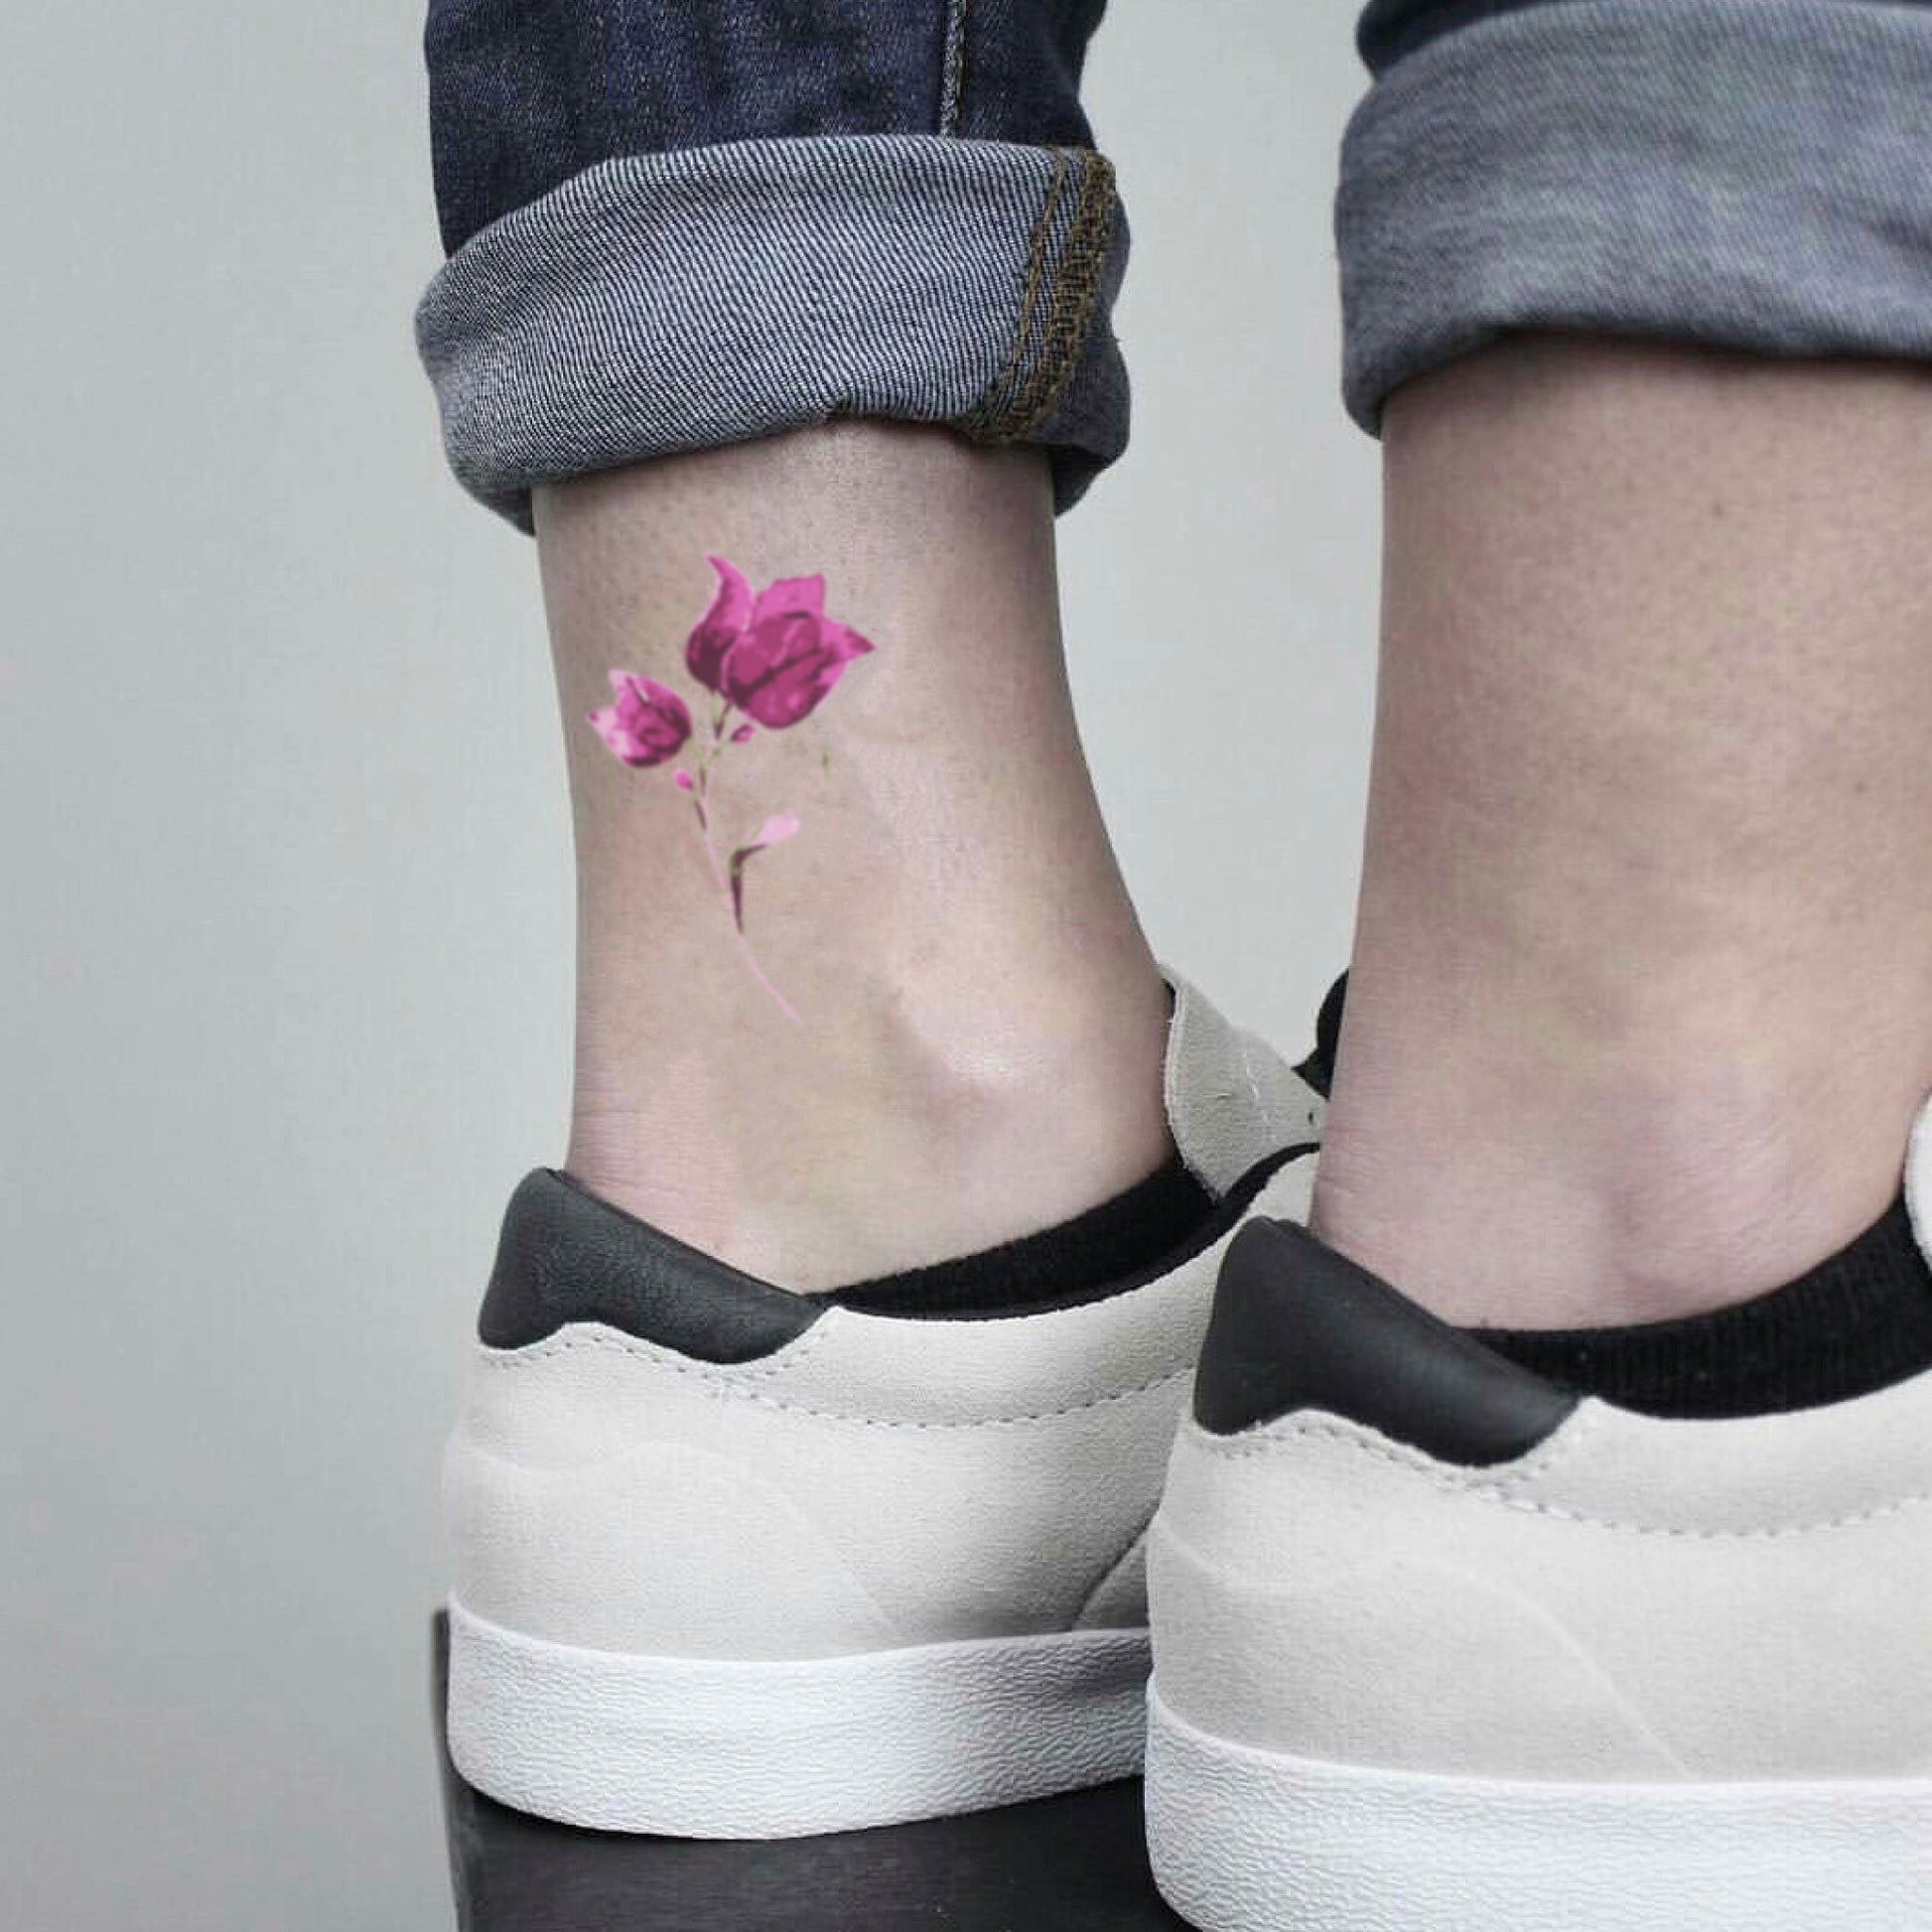 fake small bougainvillea flower temporary tattoo sticker design idea on ankle